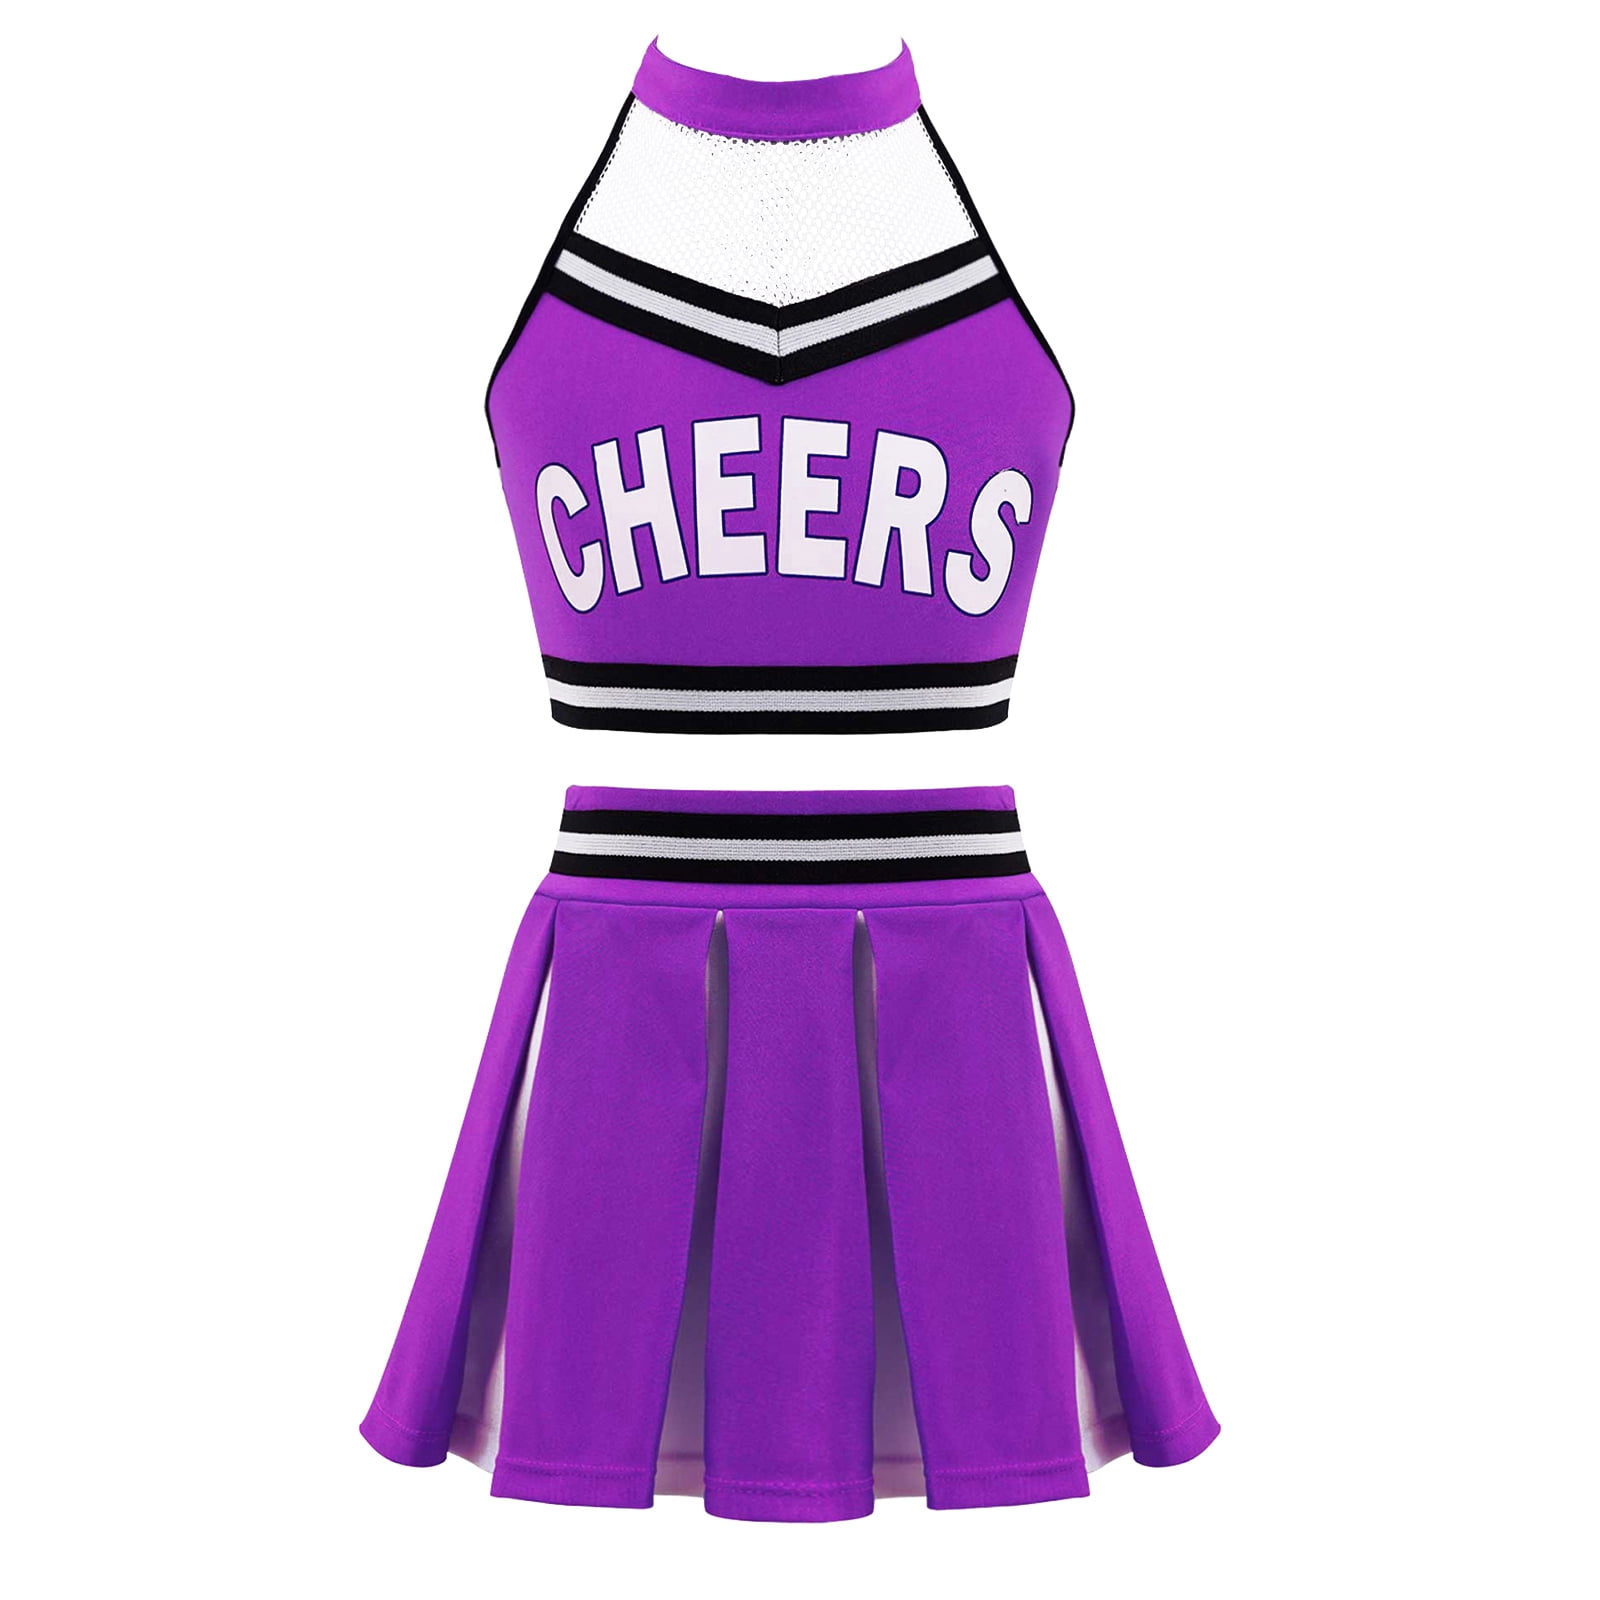 inhzoy-kids-girls-cheer-leader-costume-cheerleading-uniform-outfit